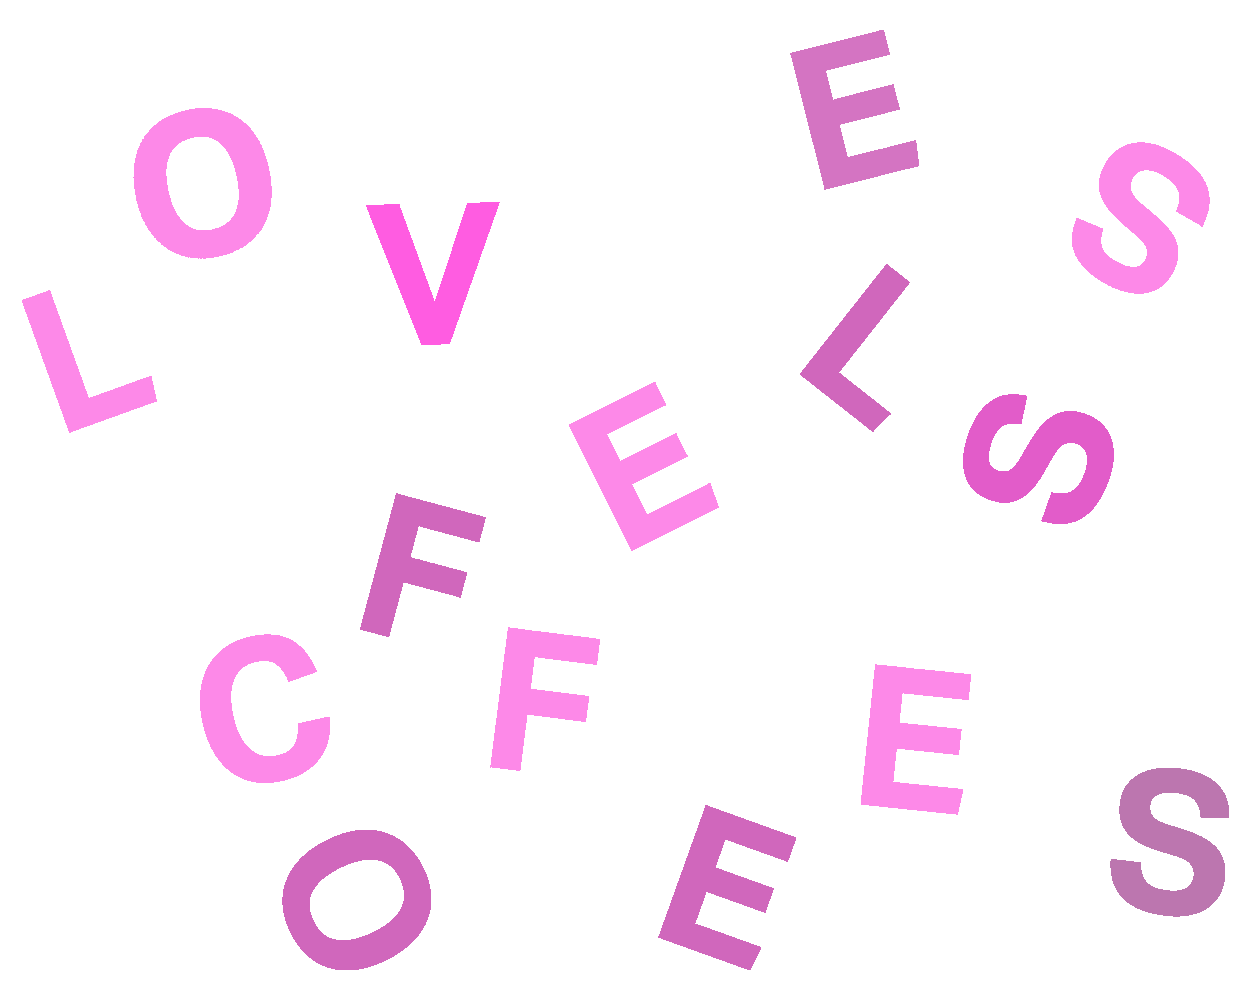 Loveless Coffees